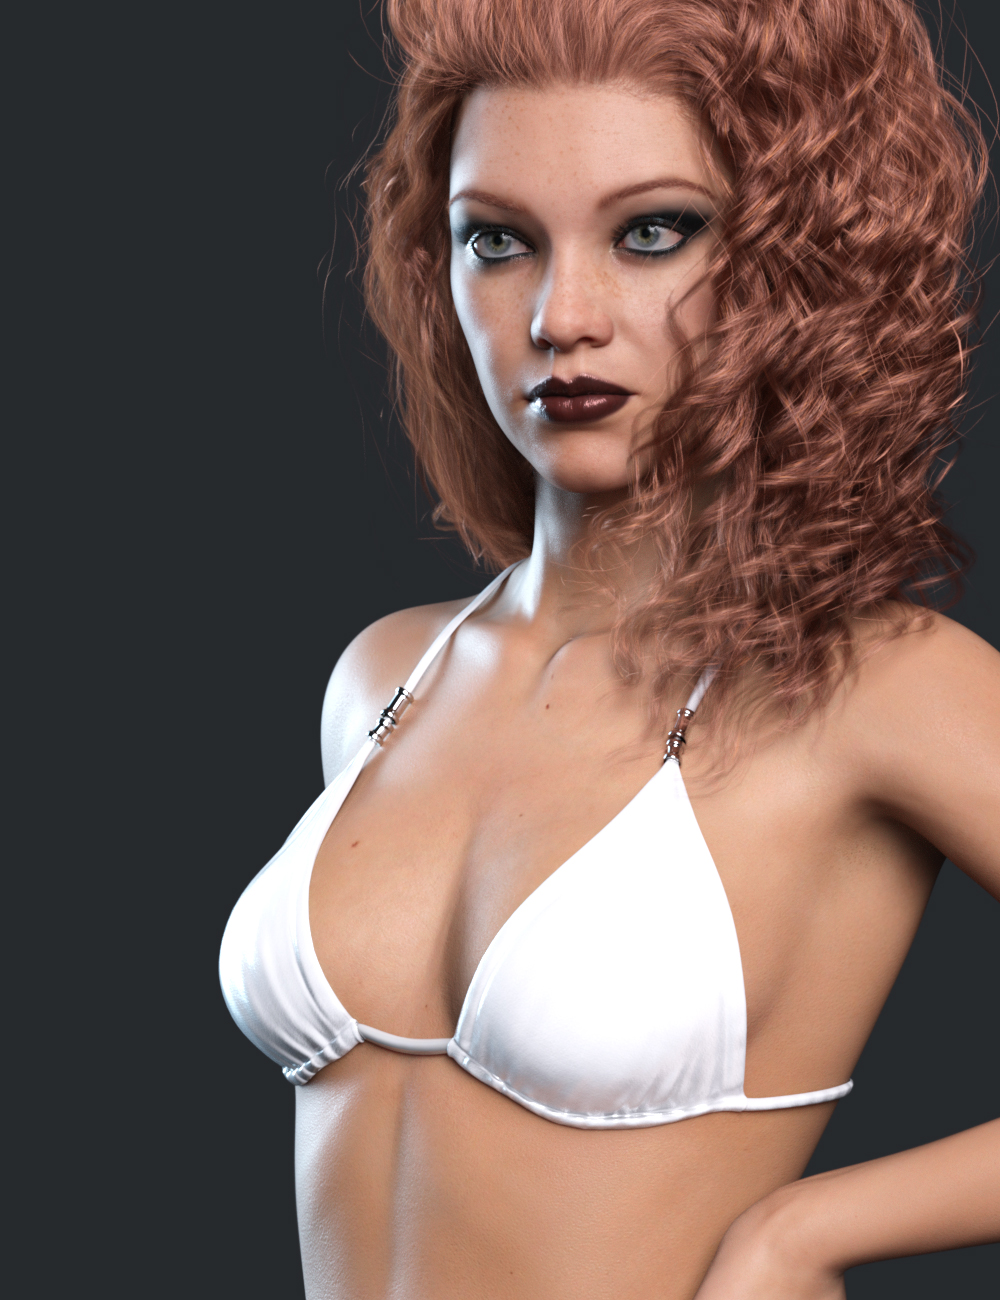 RY Norene for Genesis 8.1 Female by: Raiya, 3D Models by Daz 3D